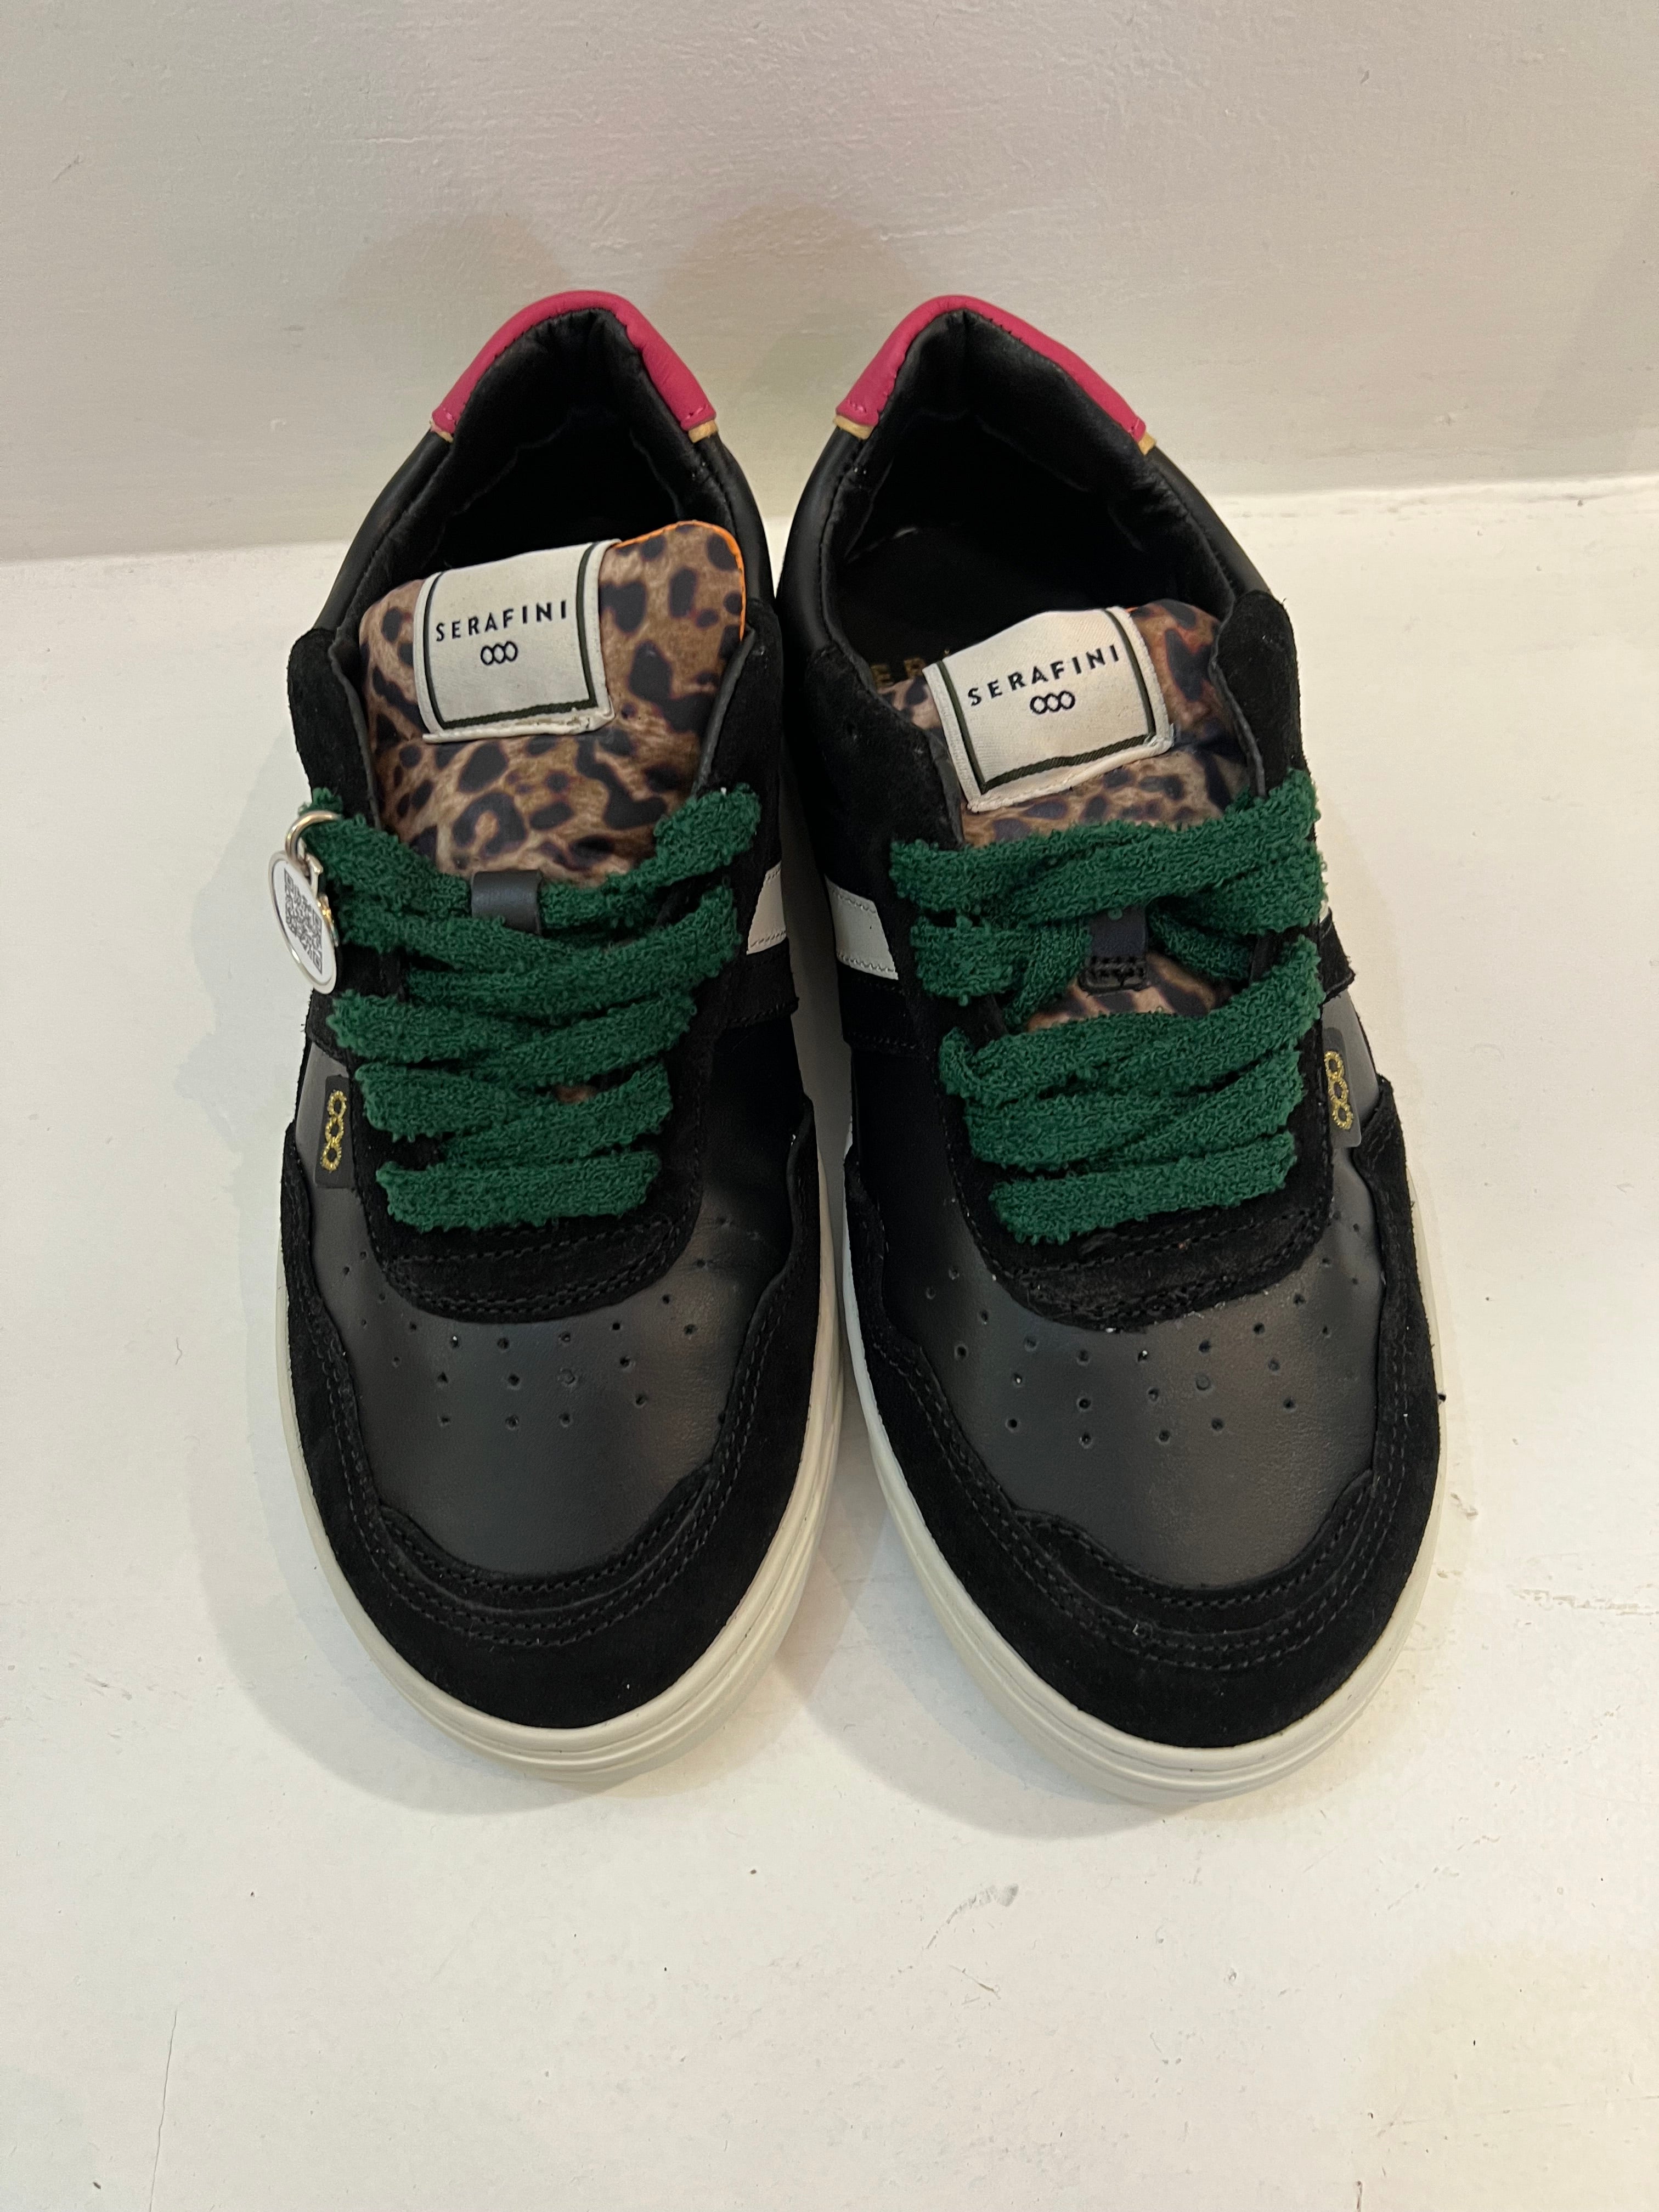 Hetre Alresford Hampshire Shoe Store Serafini Firenze Black/Leopard Sneaker